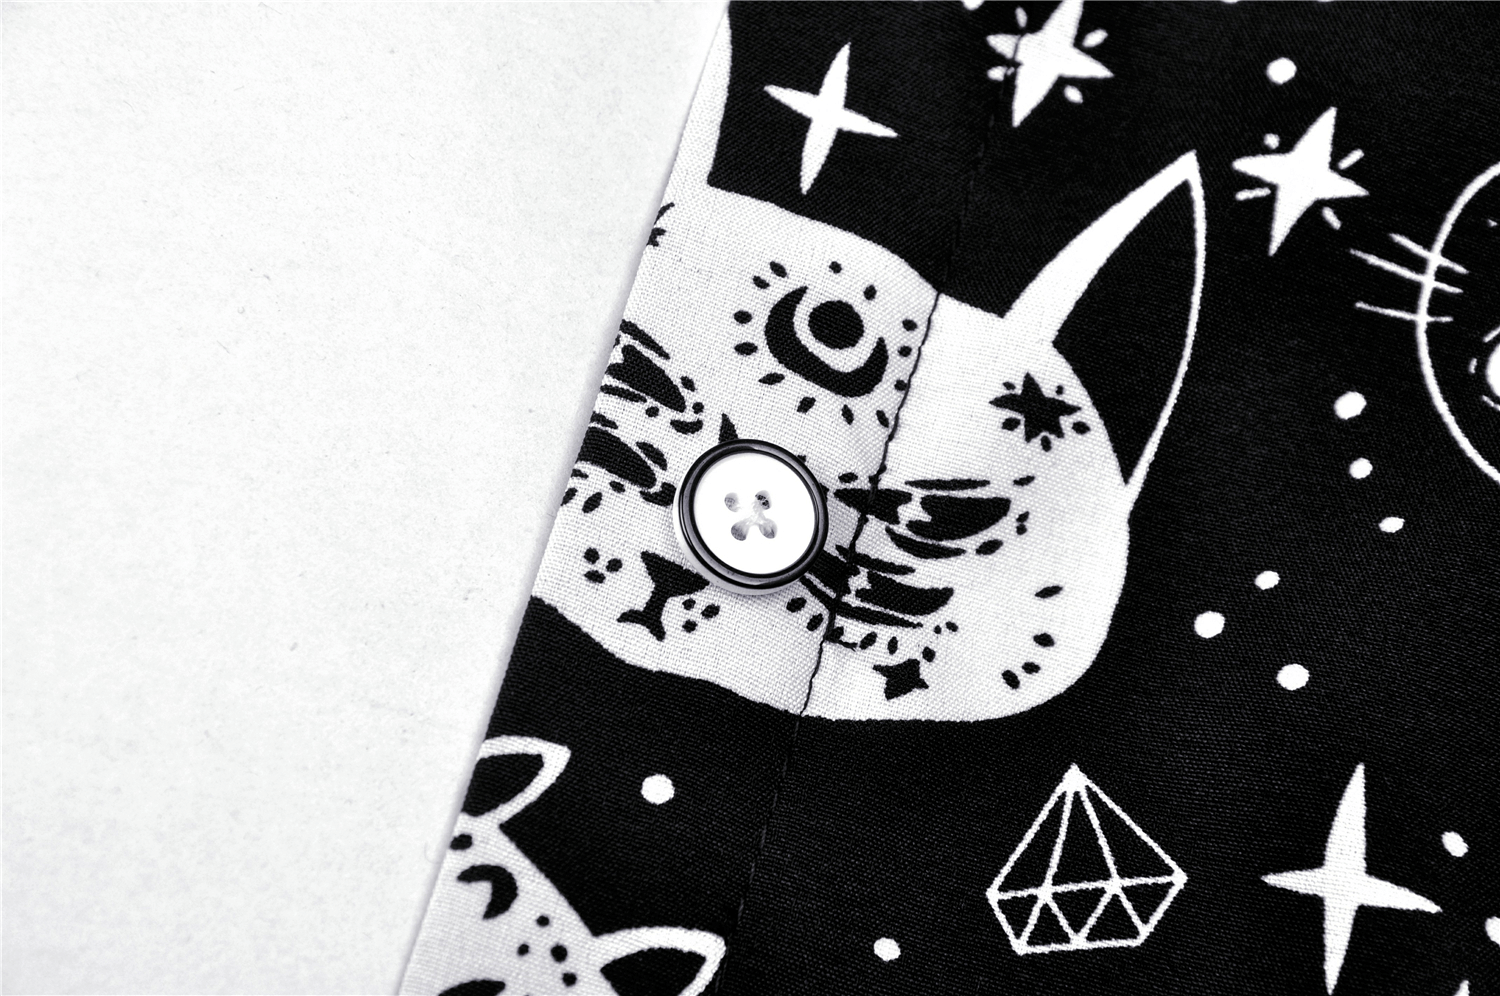 Stylish Black and White Cat Print Gothic Punk Shirt